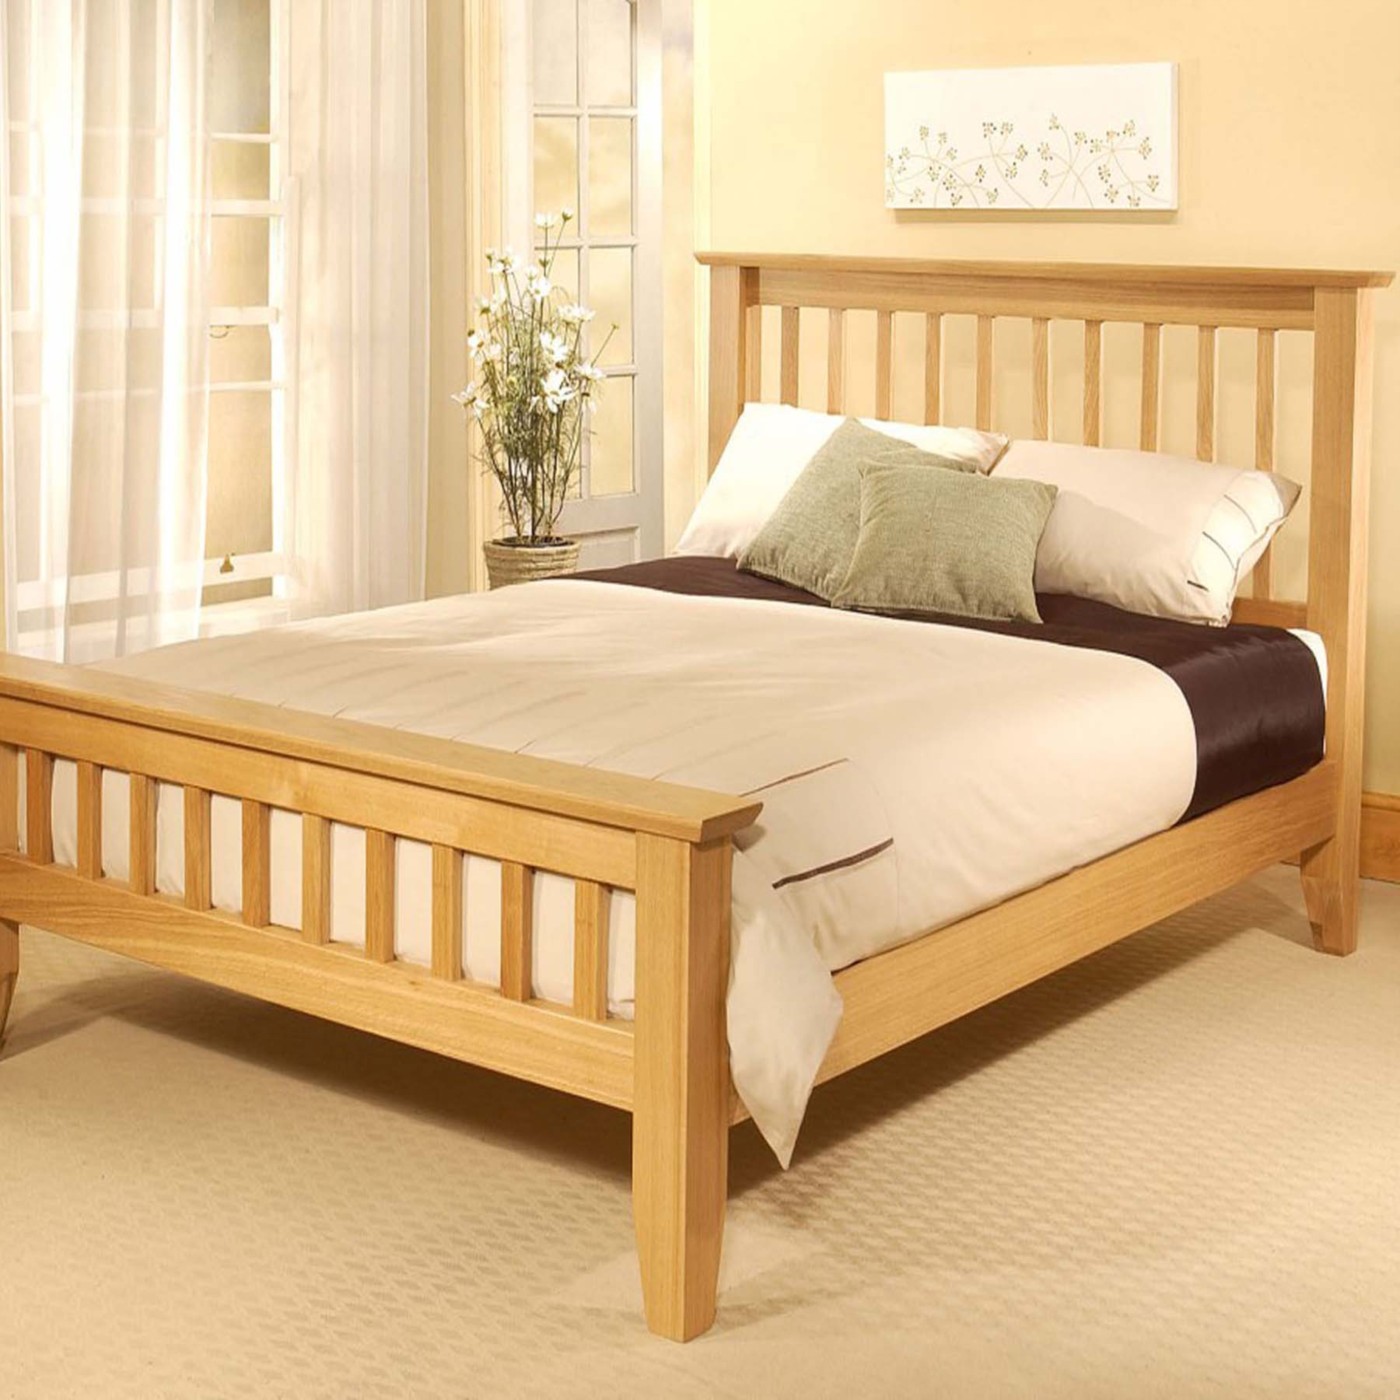 Wooden Bed Frame Plans Full PDF Plans